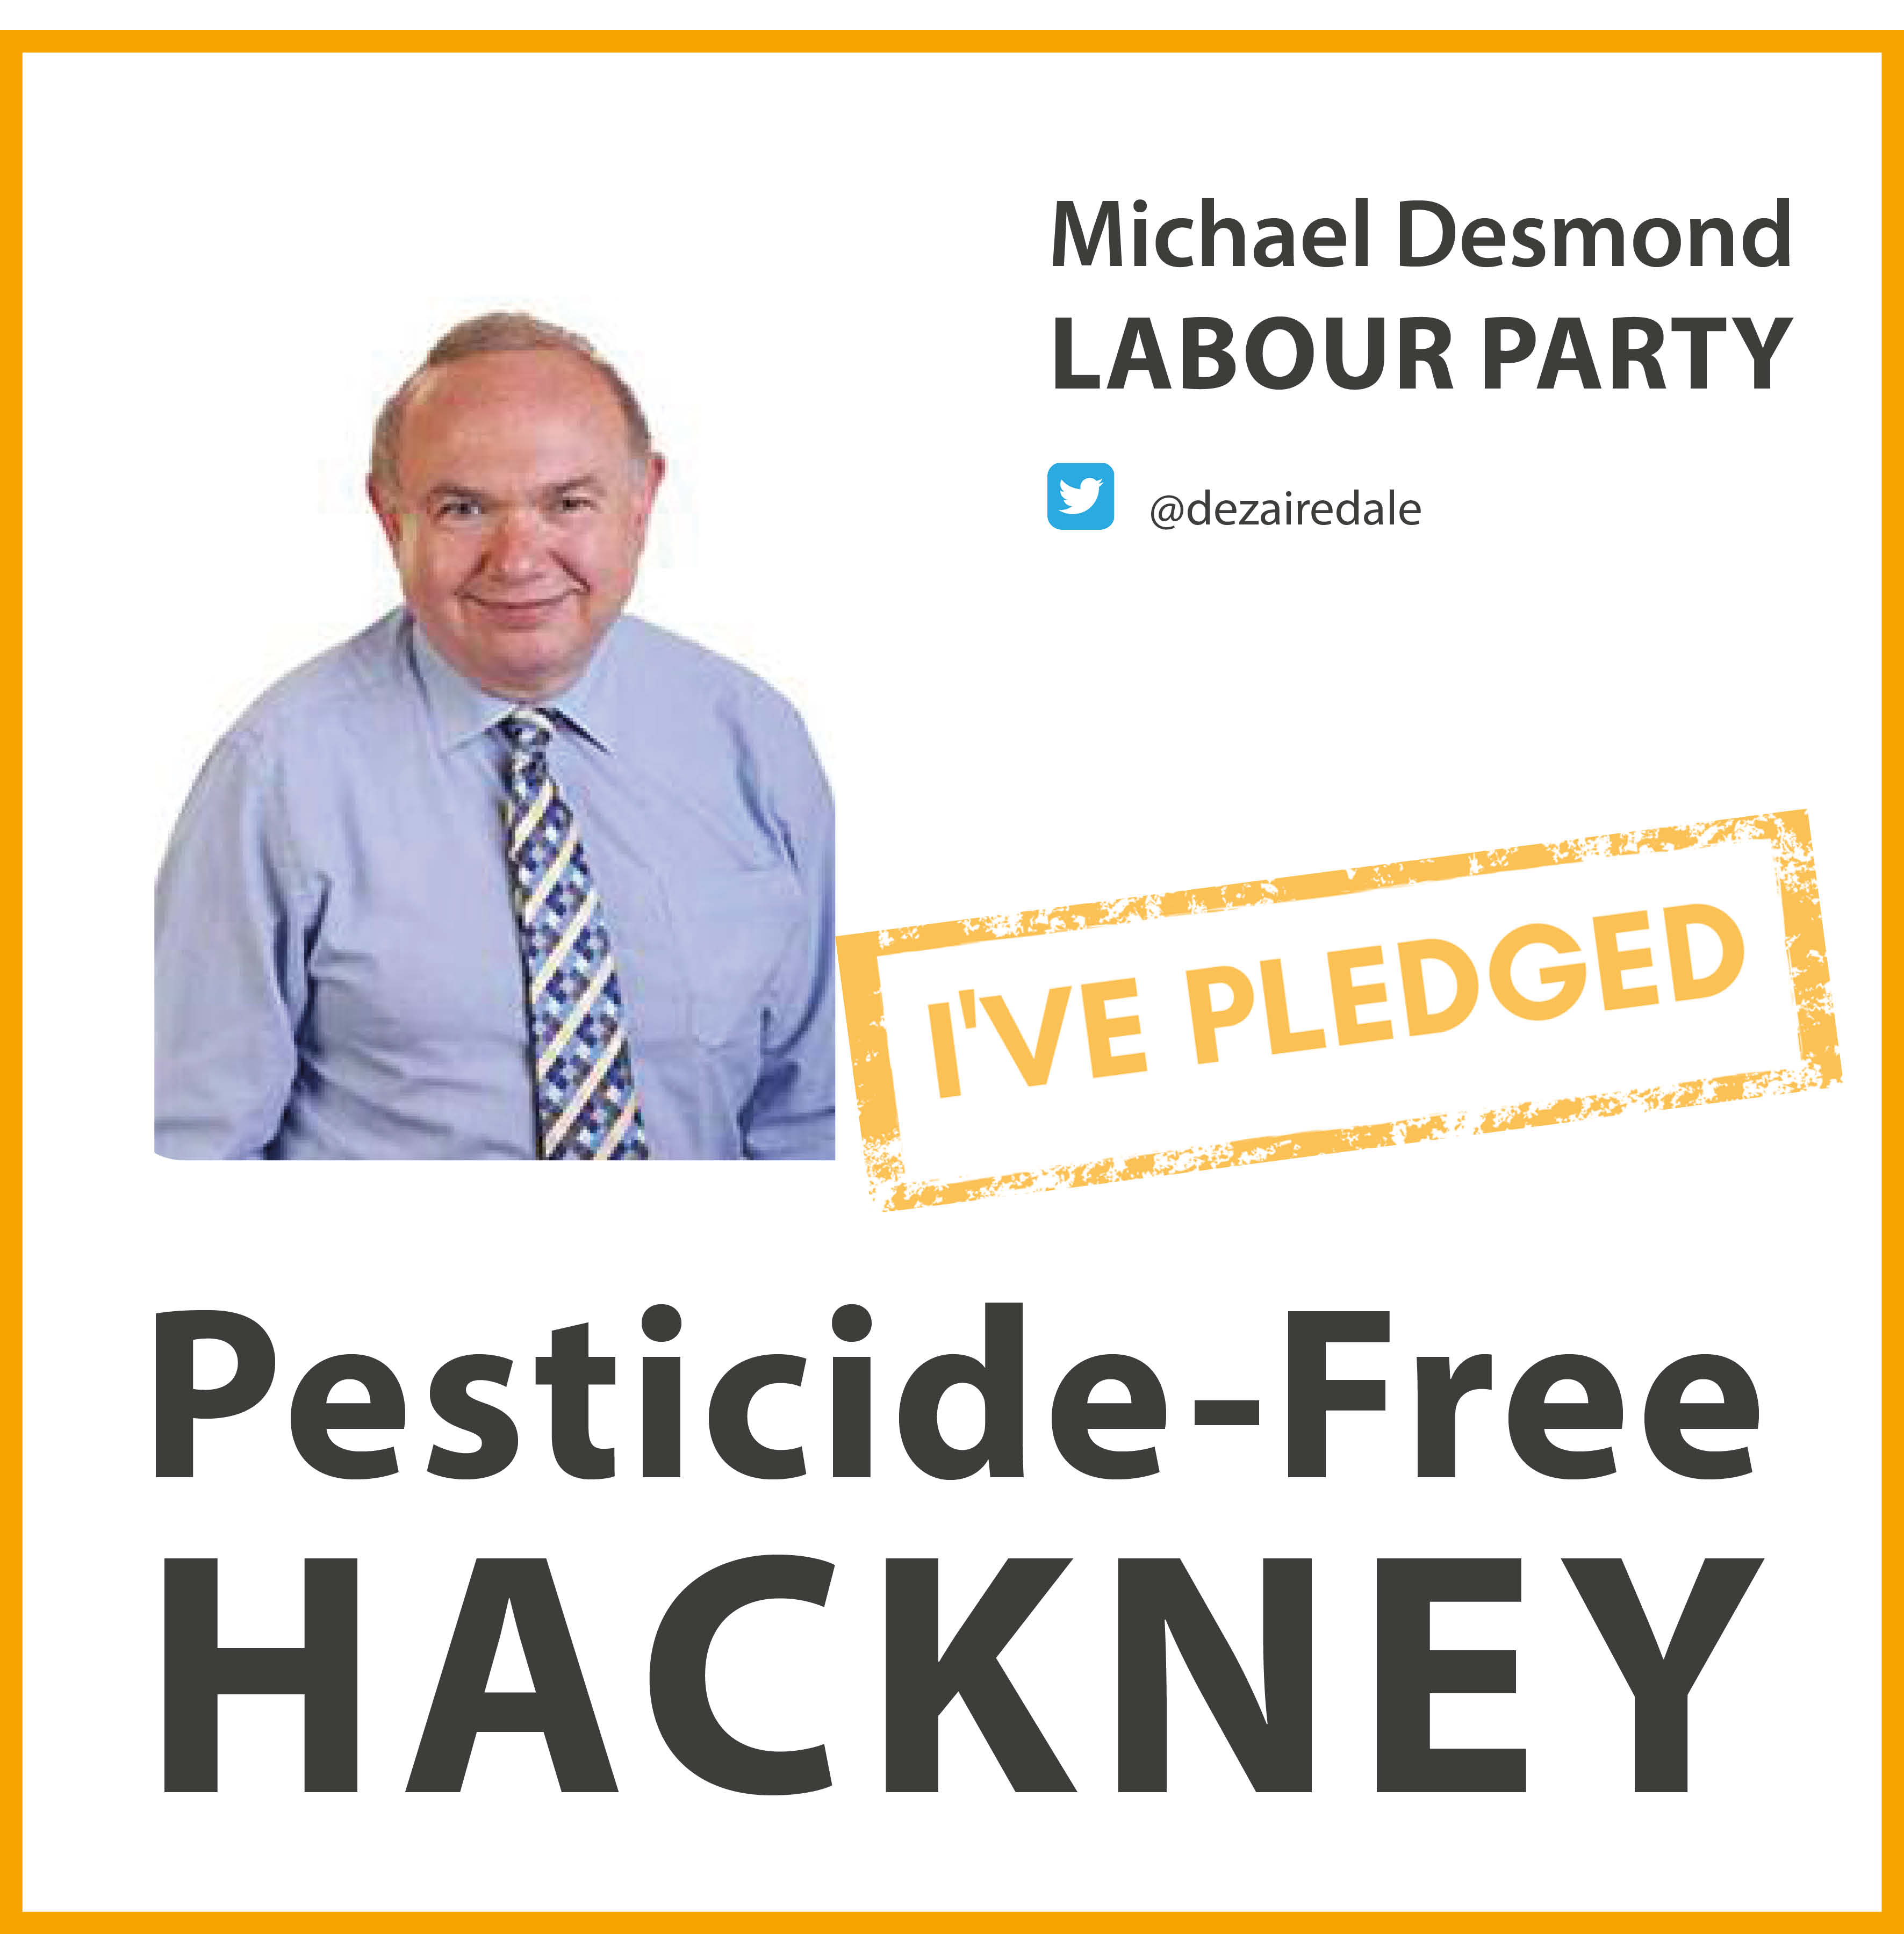 Michael Desmond has taken the pesticide-free pledge in Hackney